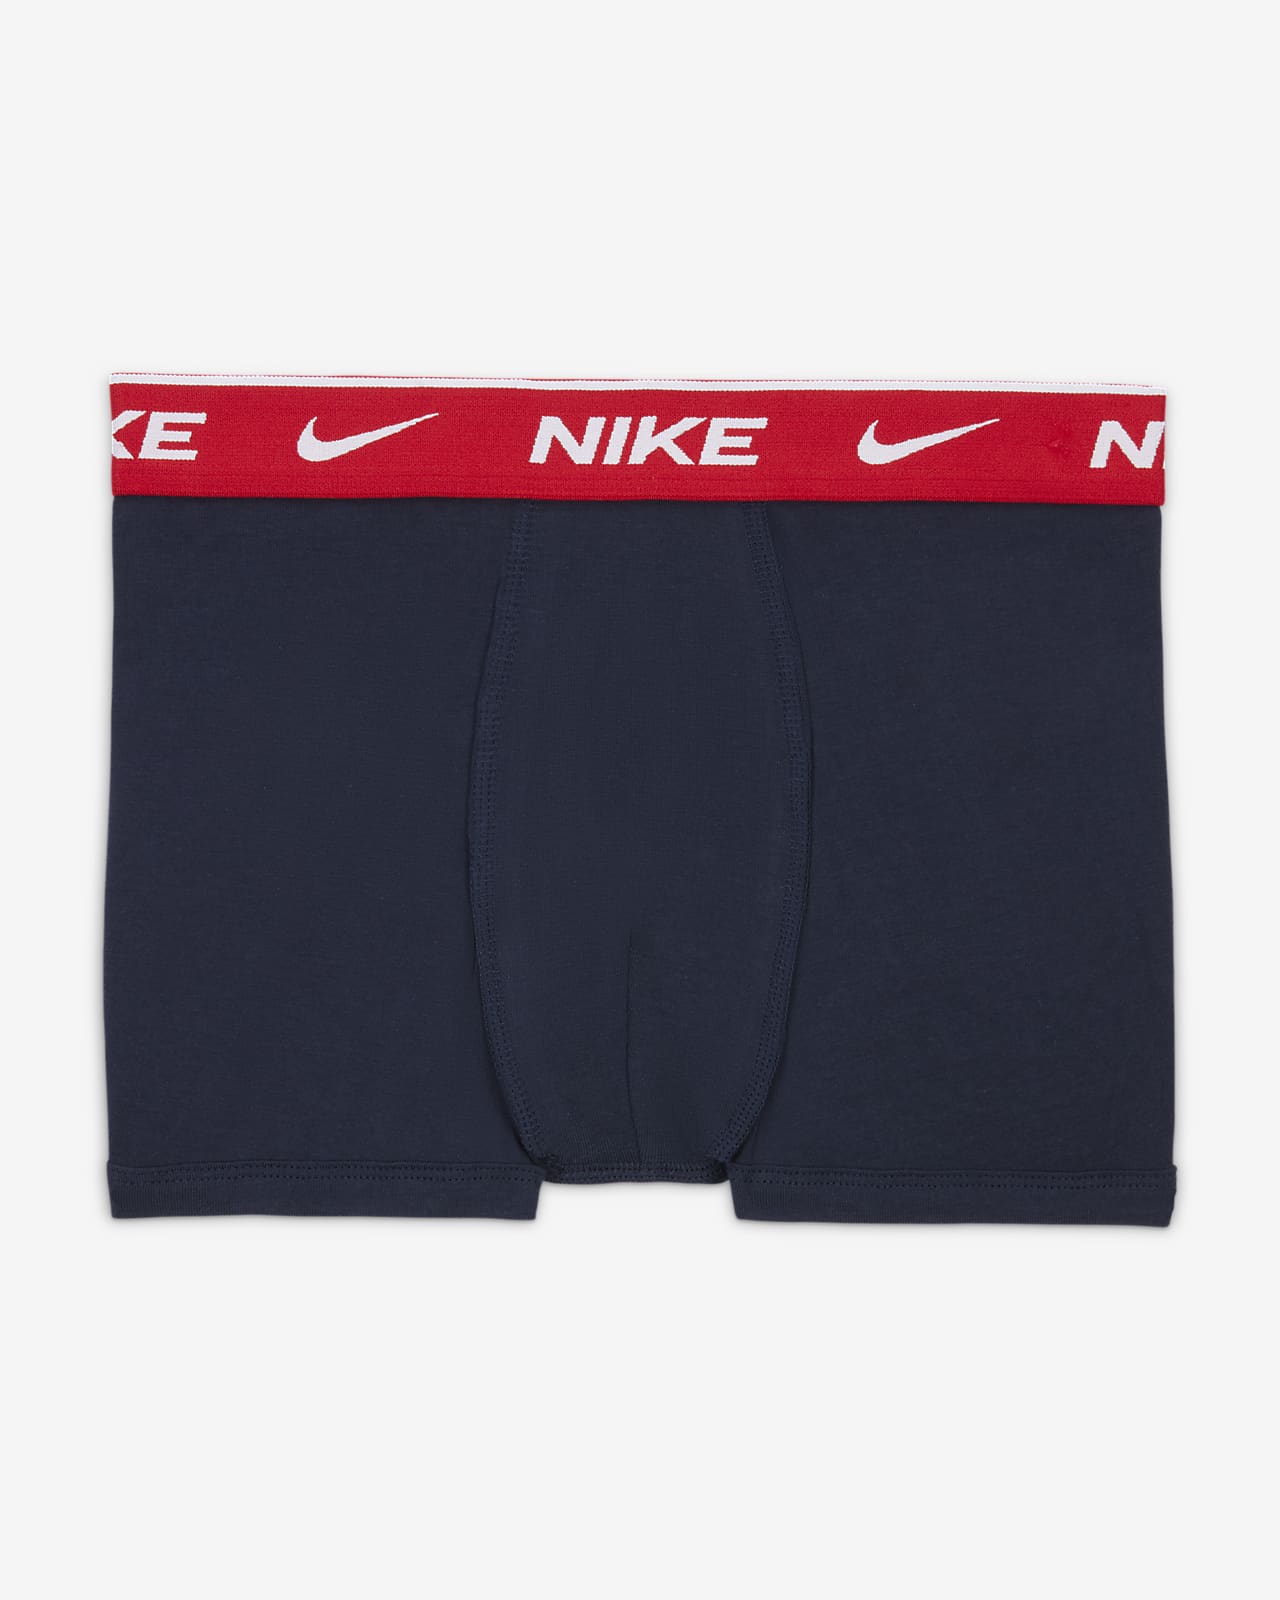 Nike Girls' Underwear for sale